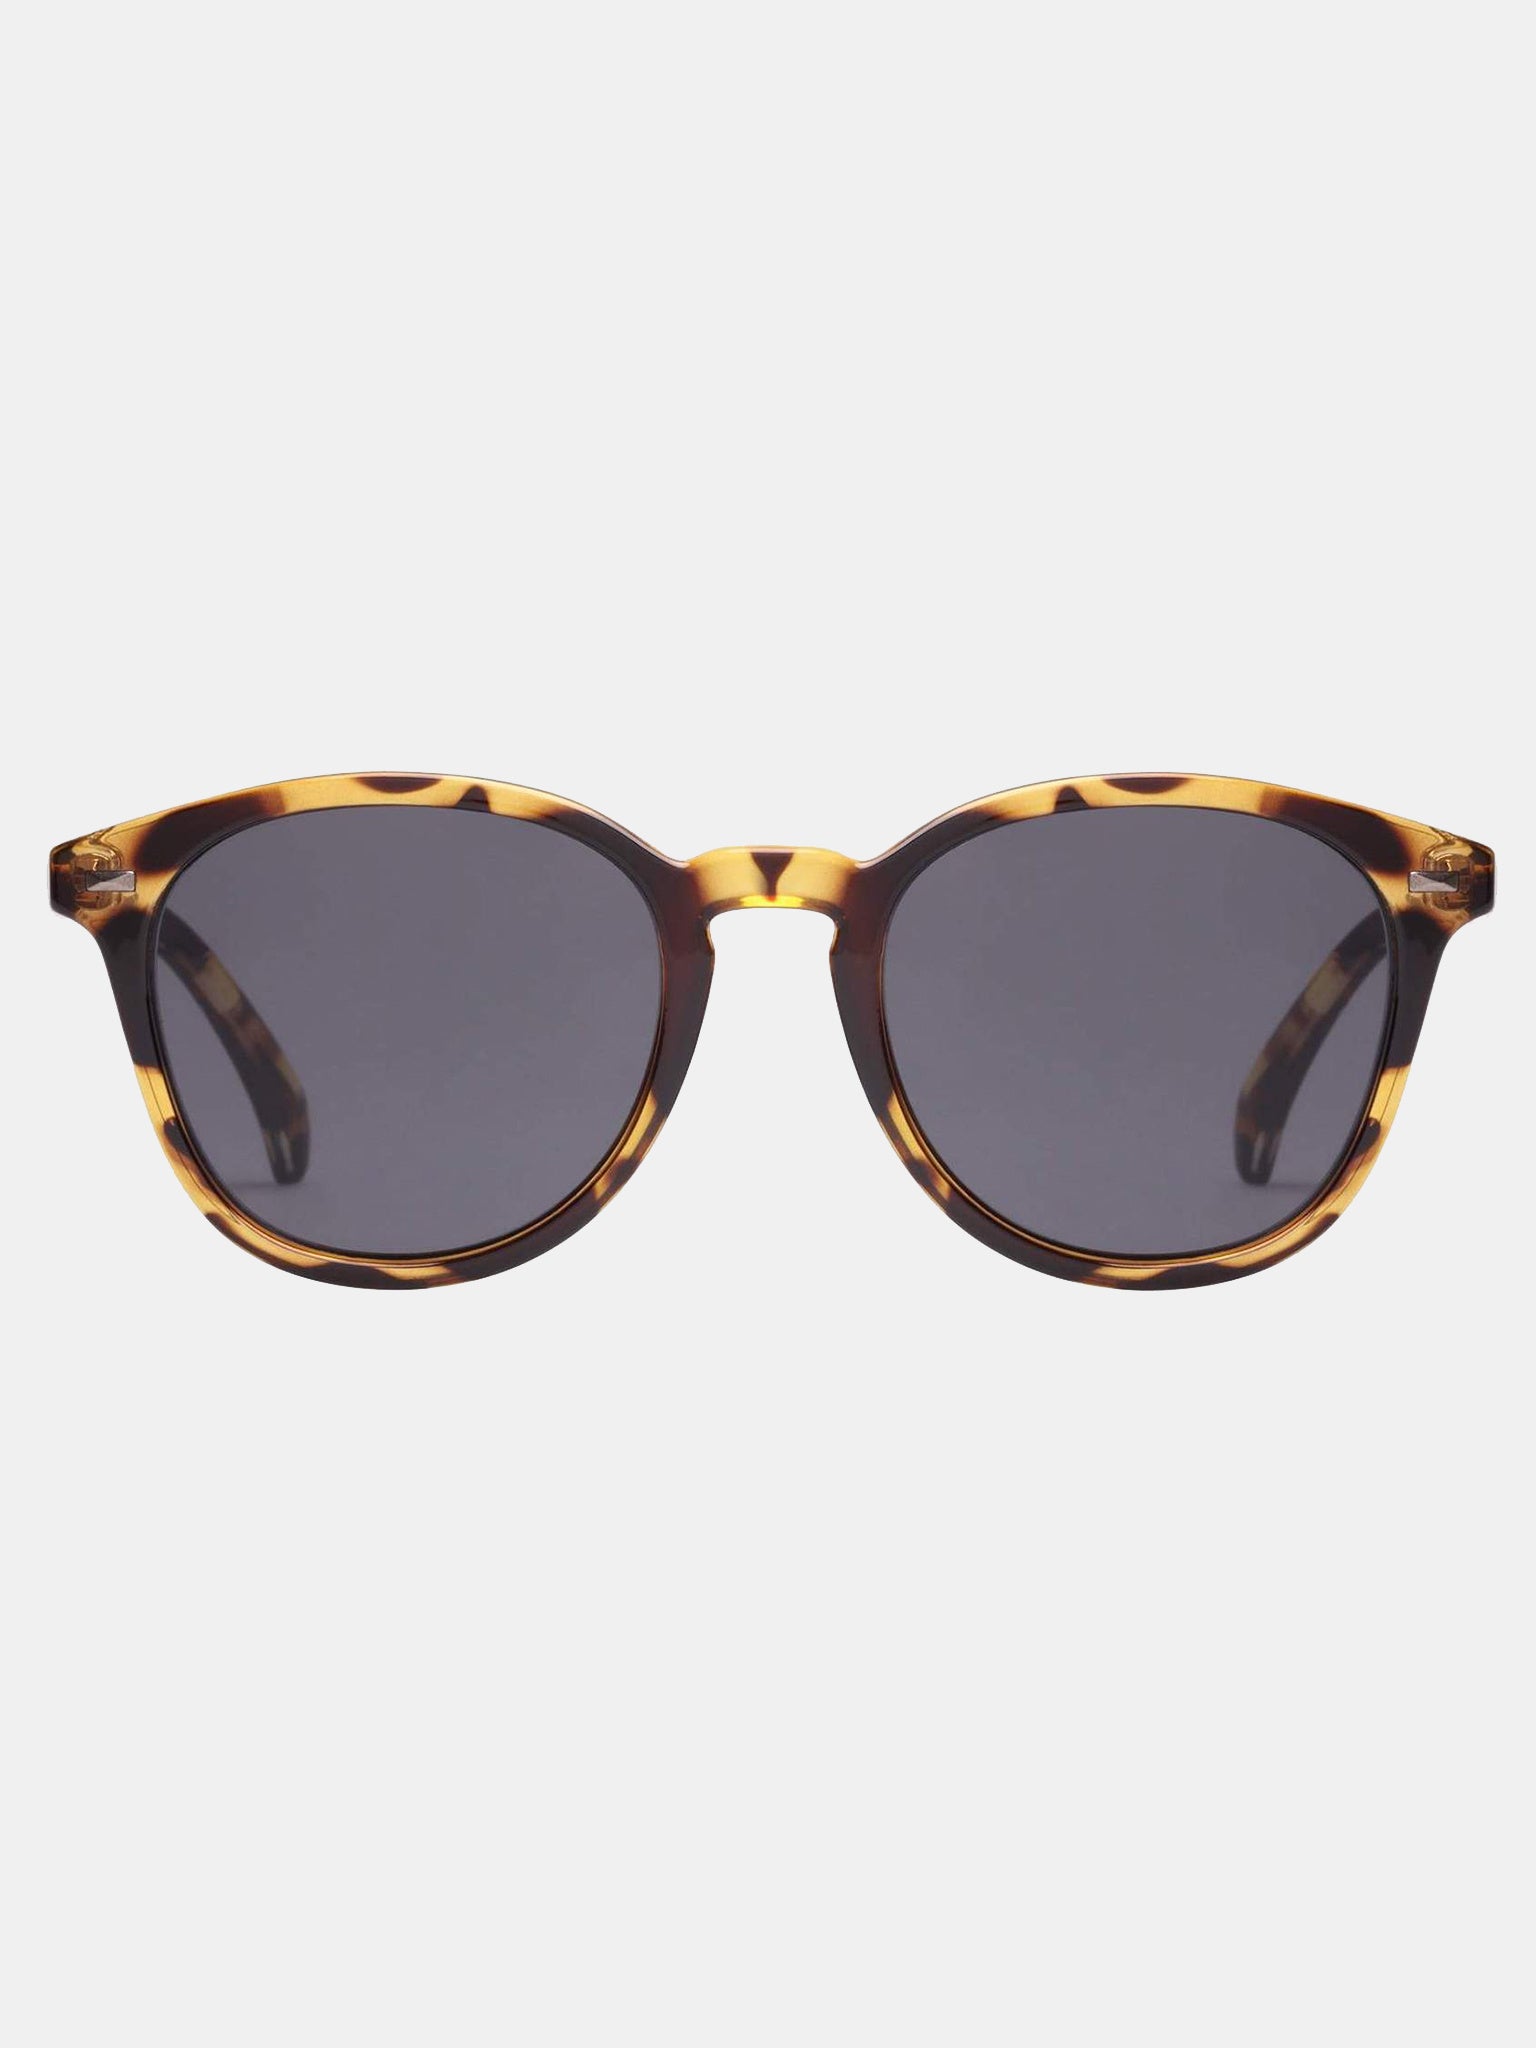 Le Specs Bandwagon Sunglasses - Saint Bernard